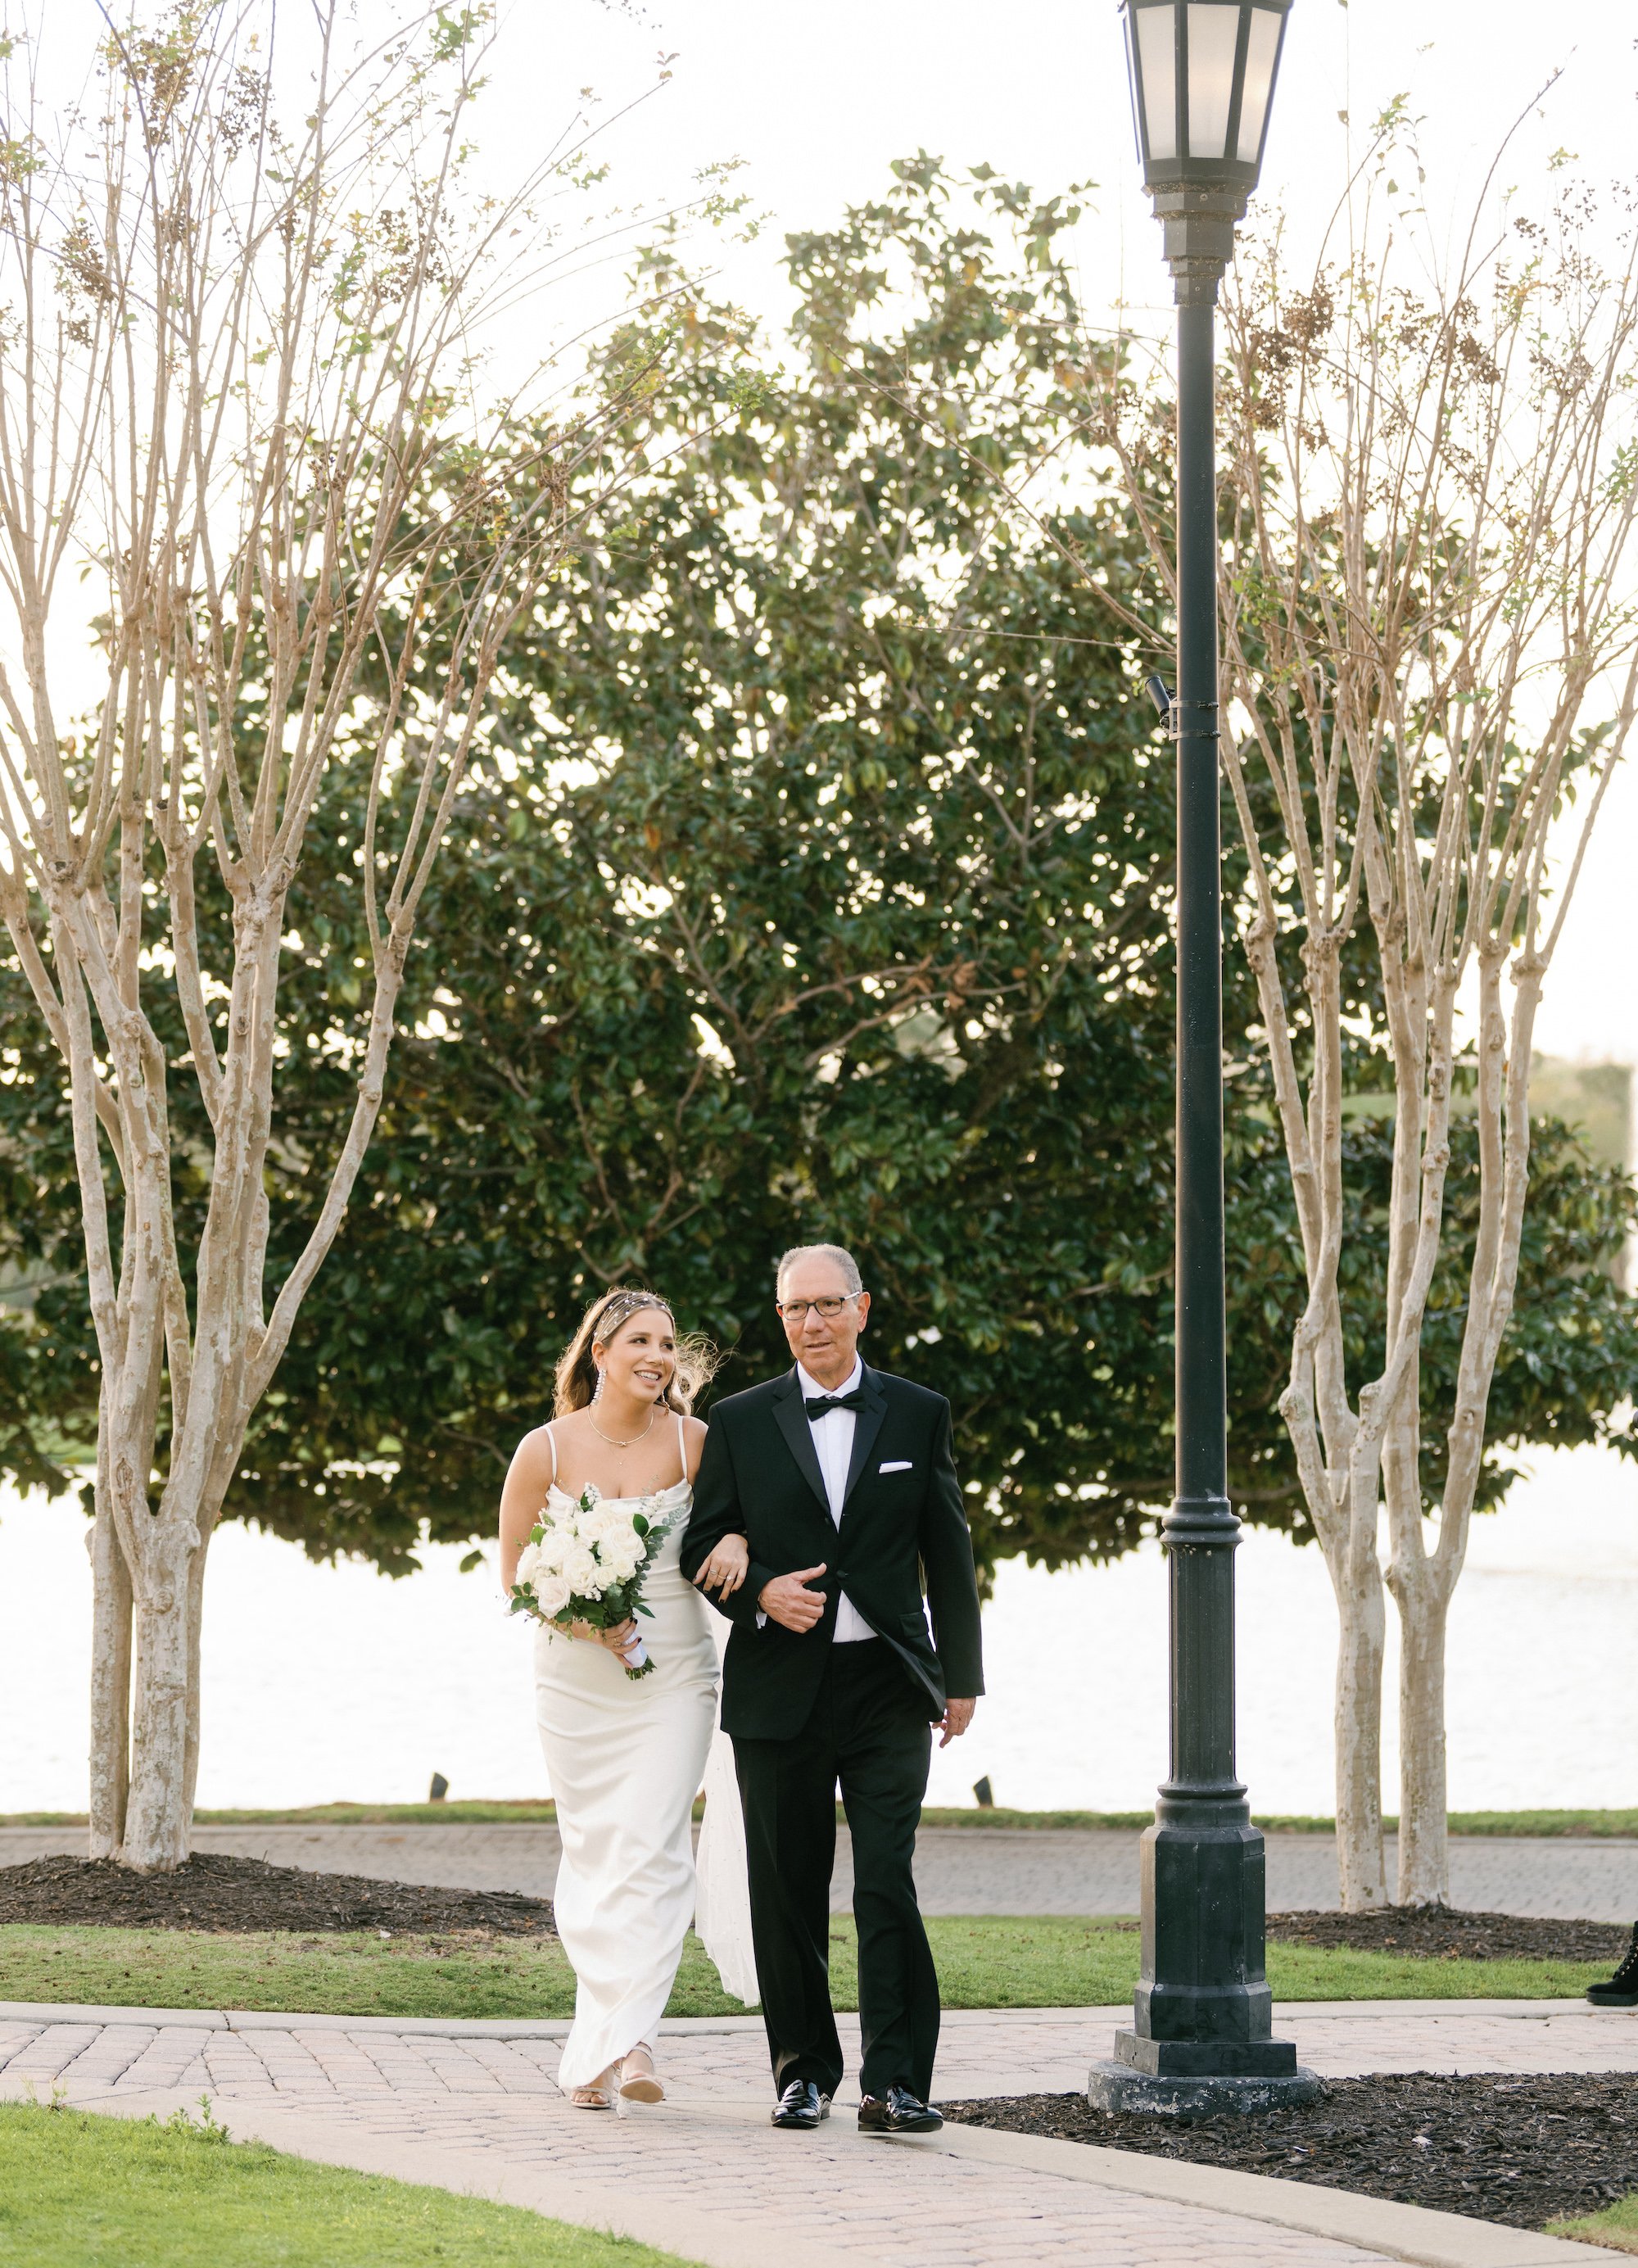 19Timeless White Courtyard Wedding | Ritz Carlton Orlando | Photographers Dewitt for Love Photography.jpg